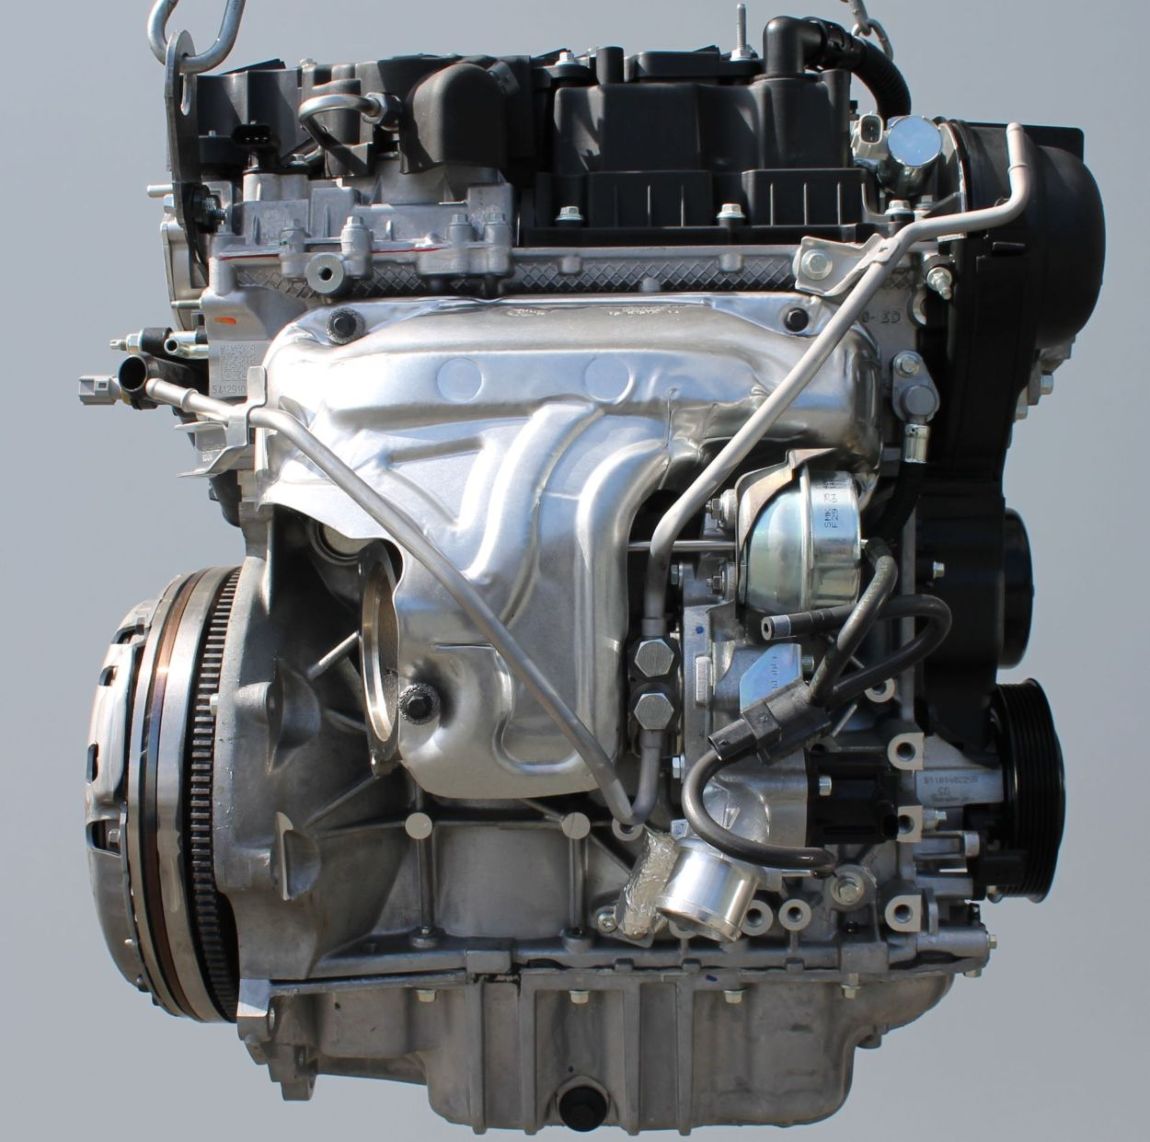 Volvo s60 двигатели. B4164t Volvo s60. Двигатель b4164t Volvo s60. Двигатель Вольво 1.6 180 л.с. Volvo b60.